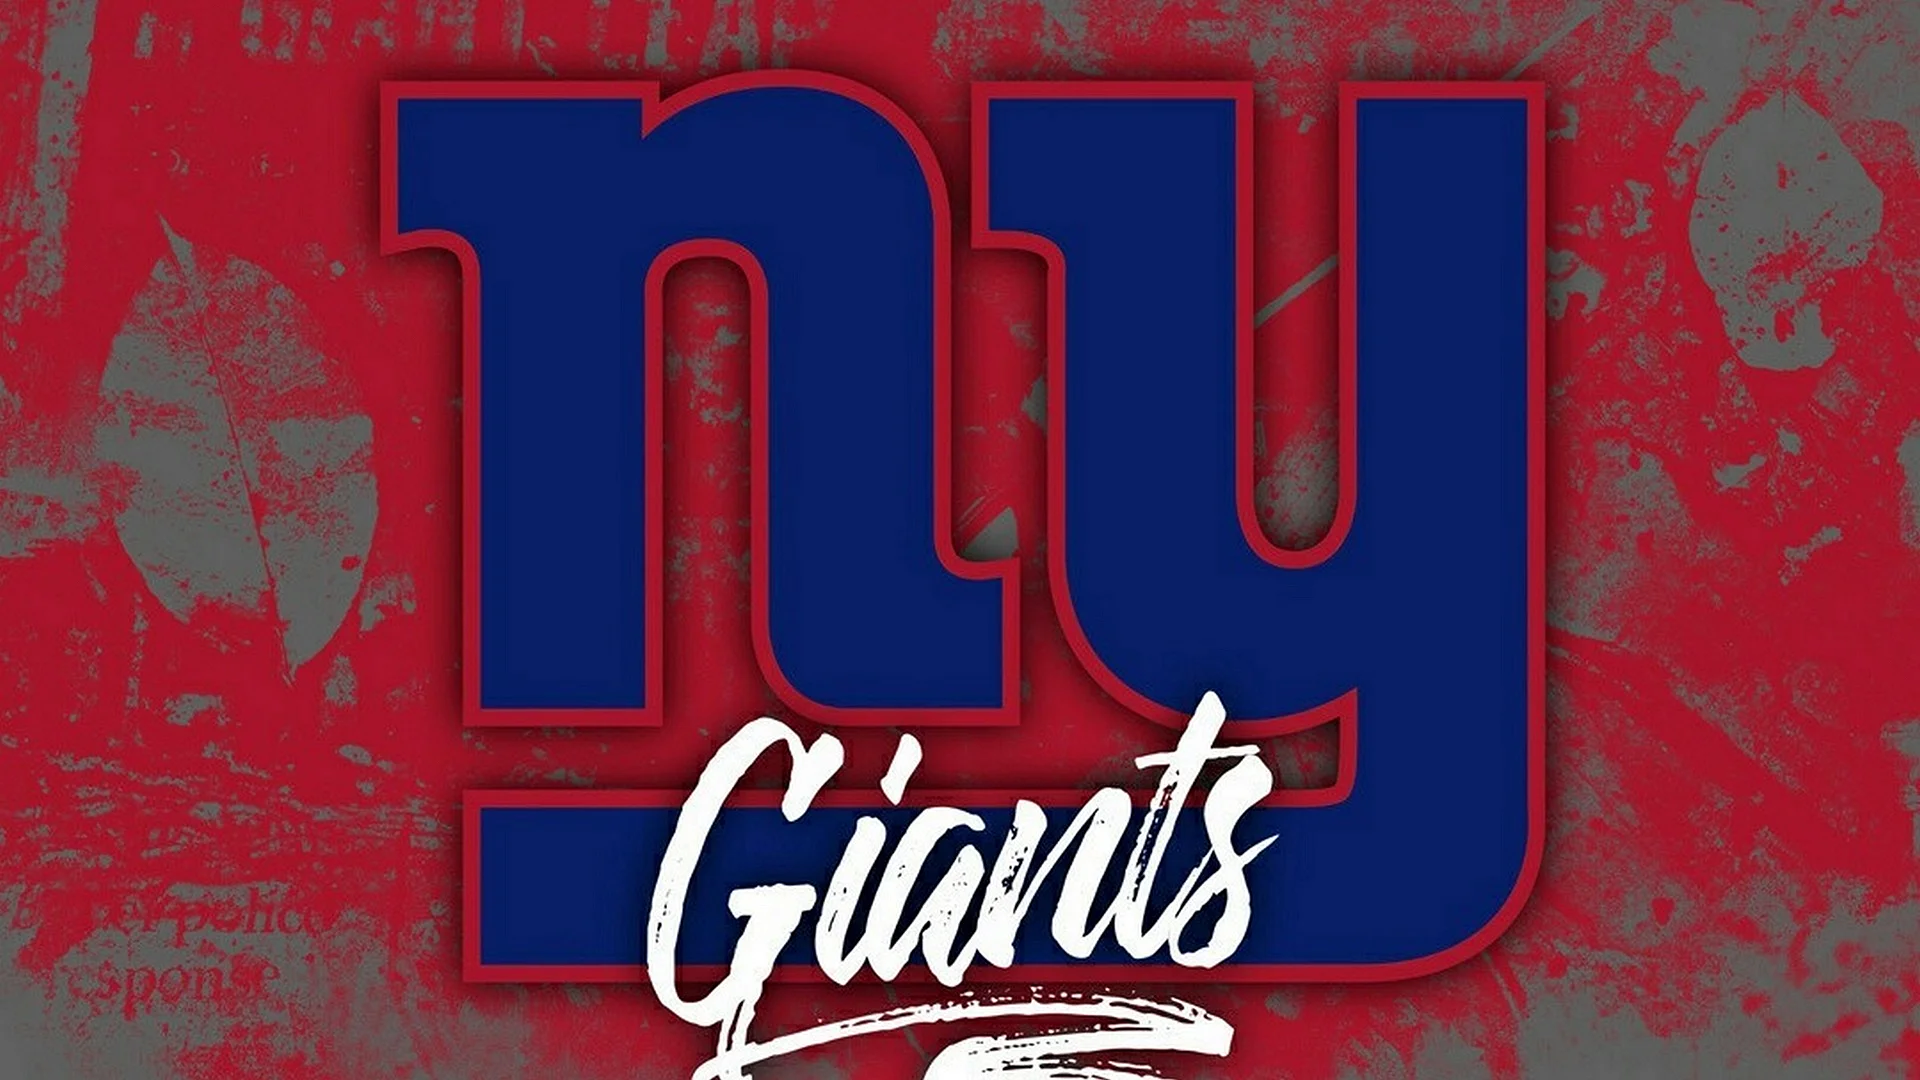 New York Giants Background Wallpaper